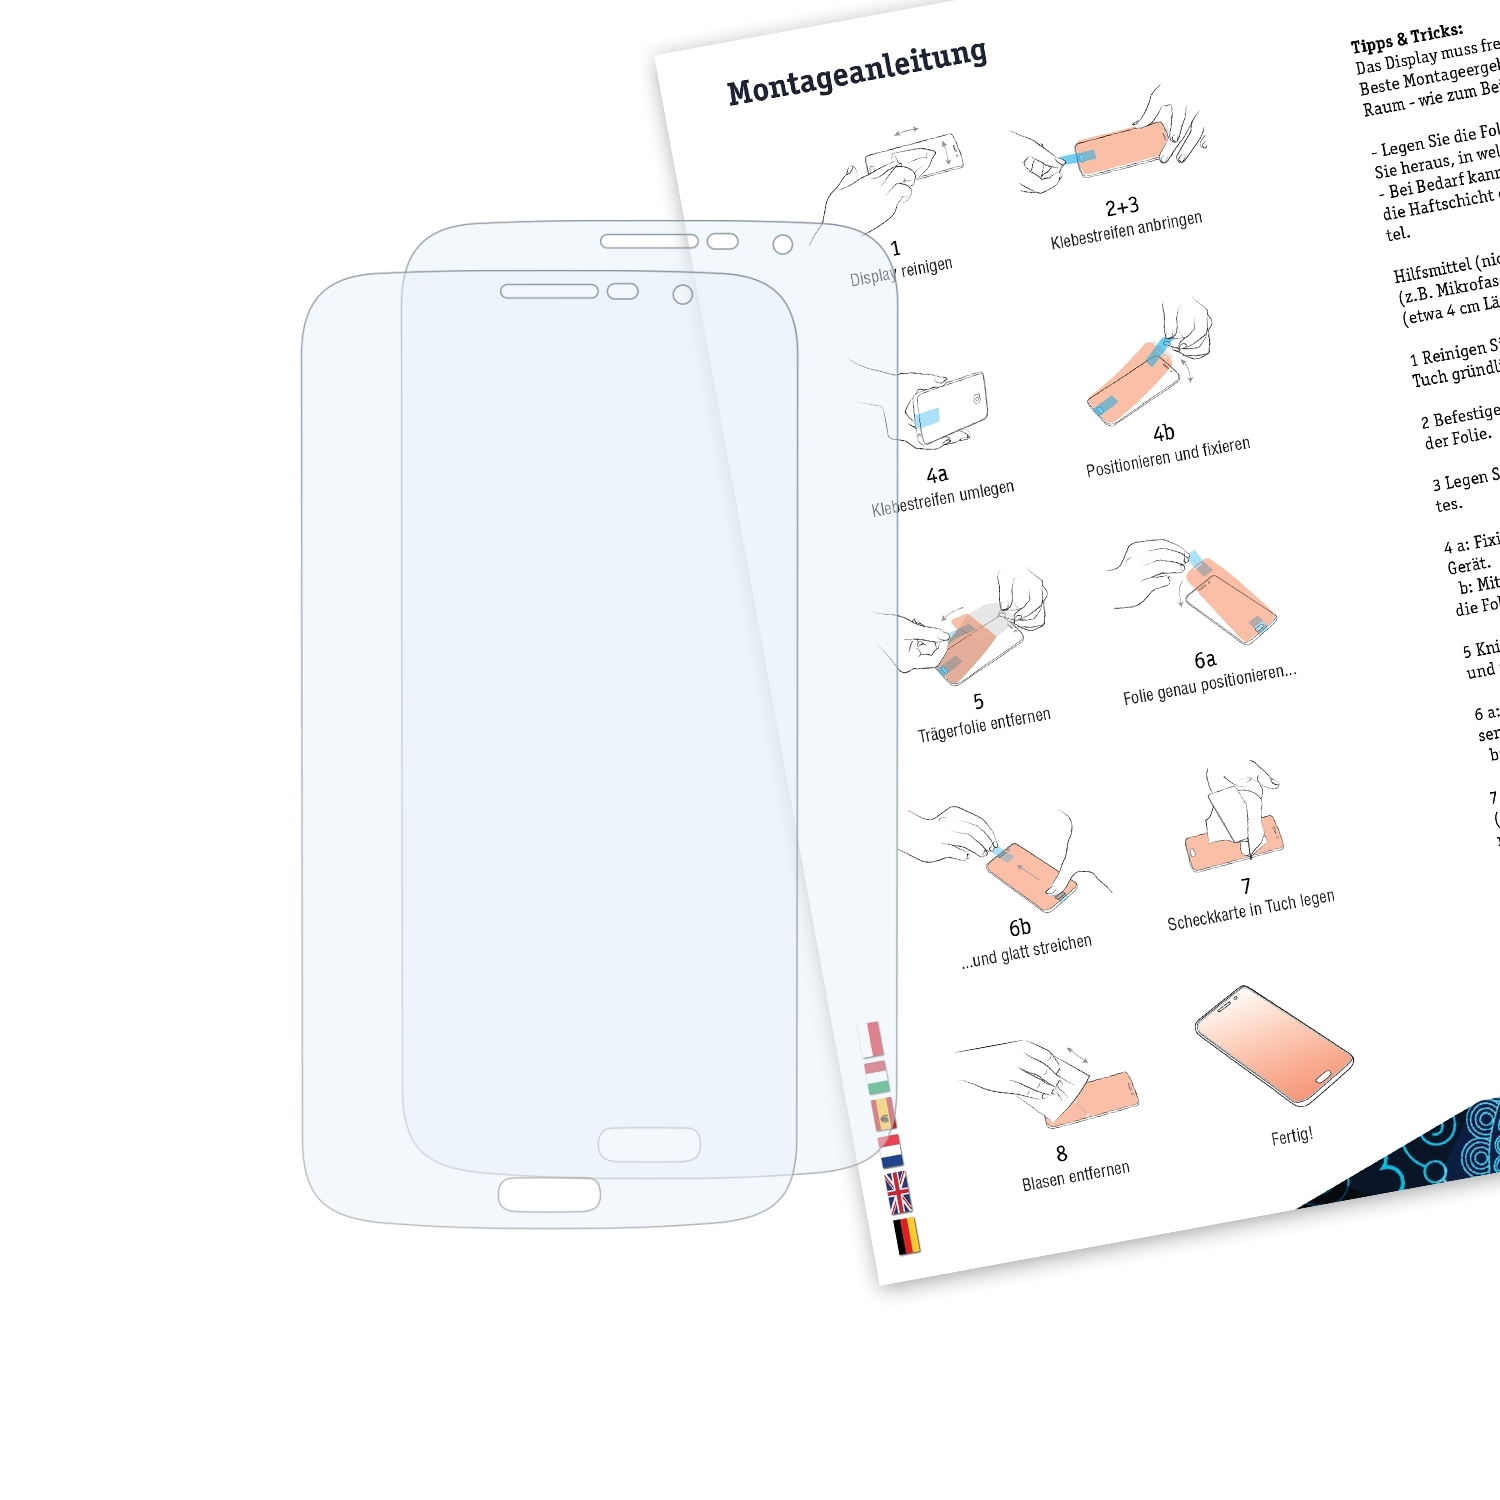 Galaxy 2x Mega (GT-i9205)) BRUNI Basics-Clear 6.3 Schutzfolie(für Samsung